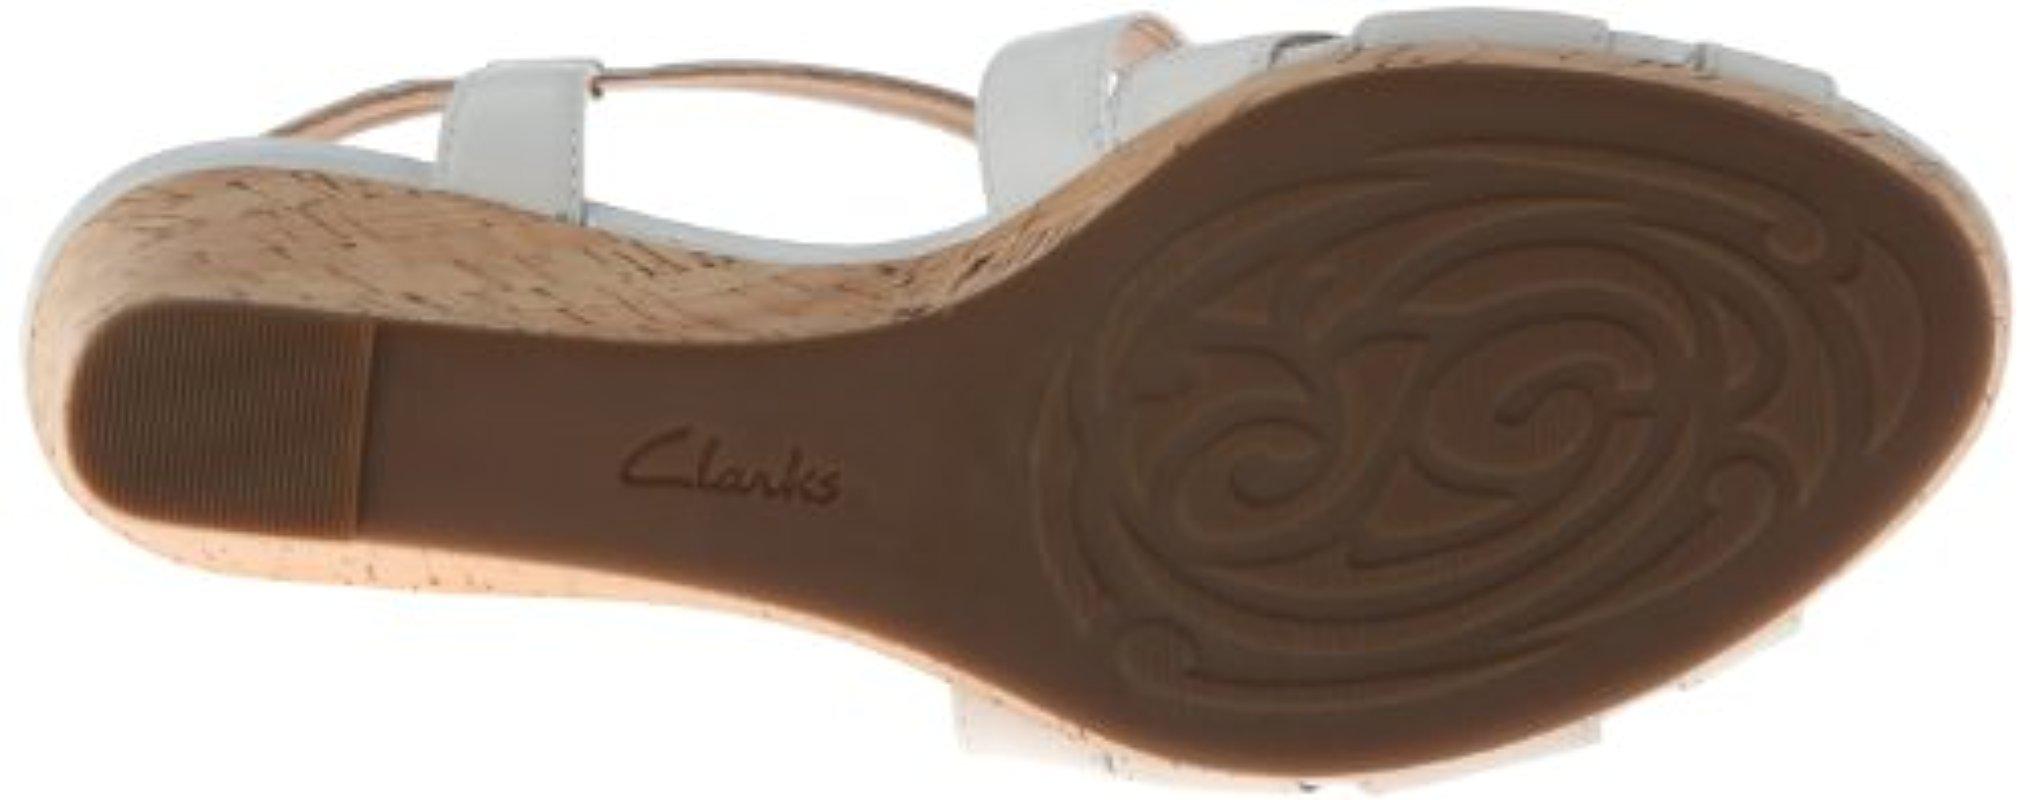 clarks artisan palmdale rema wedge sandals